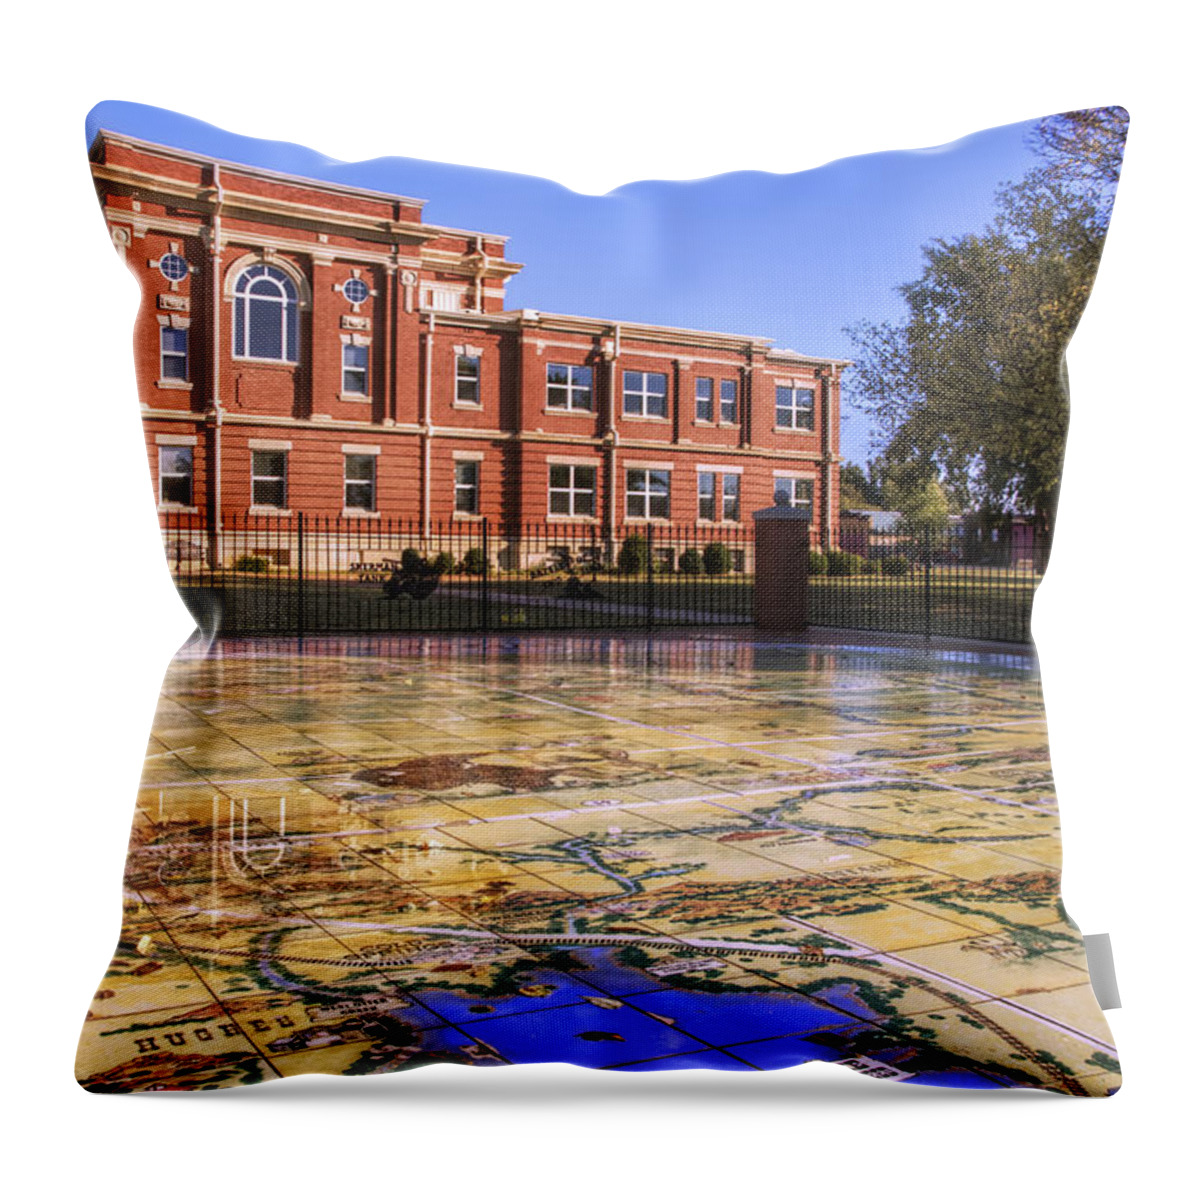 Oklahoma Throw Pillow featuring the photograph Kiowa County Courthouse with Mural - Hobart - Oklahoma by Jason Politte